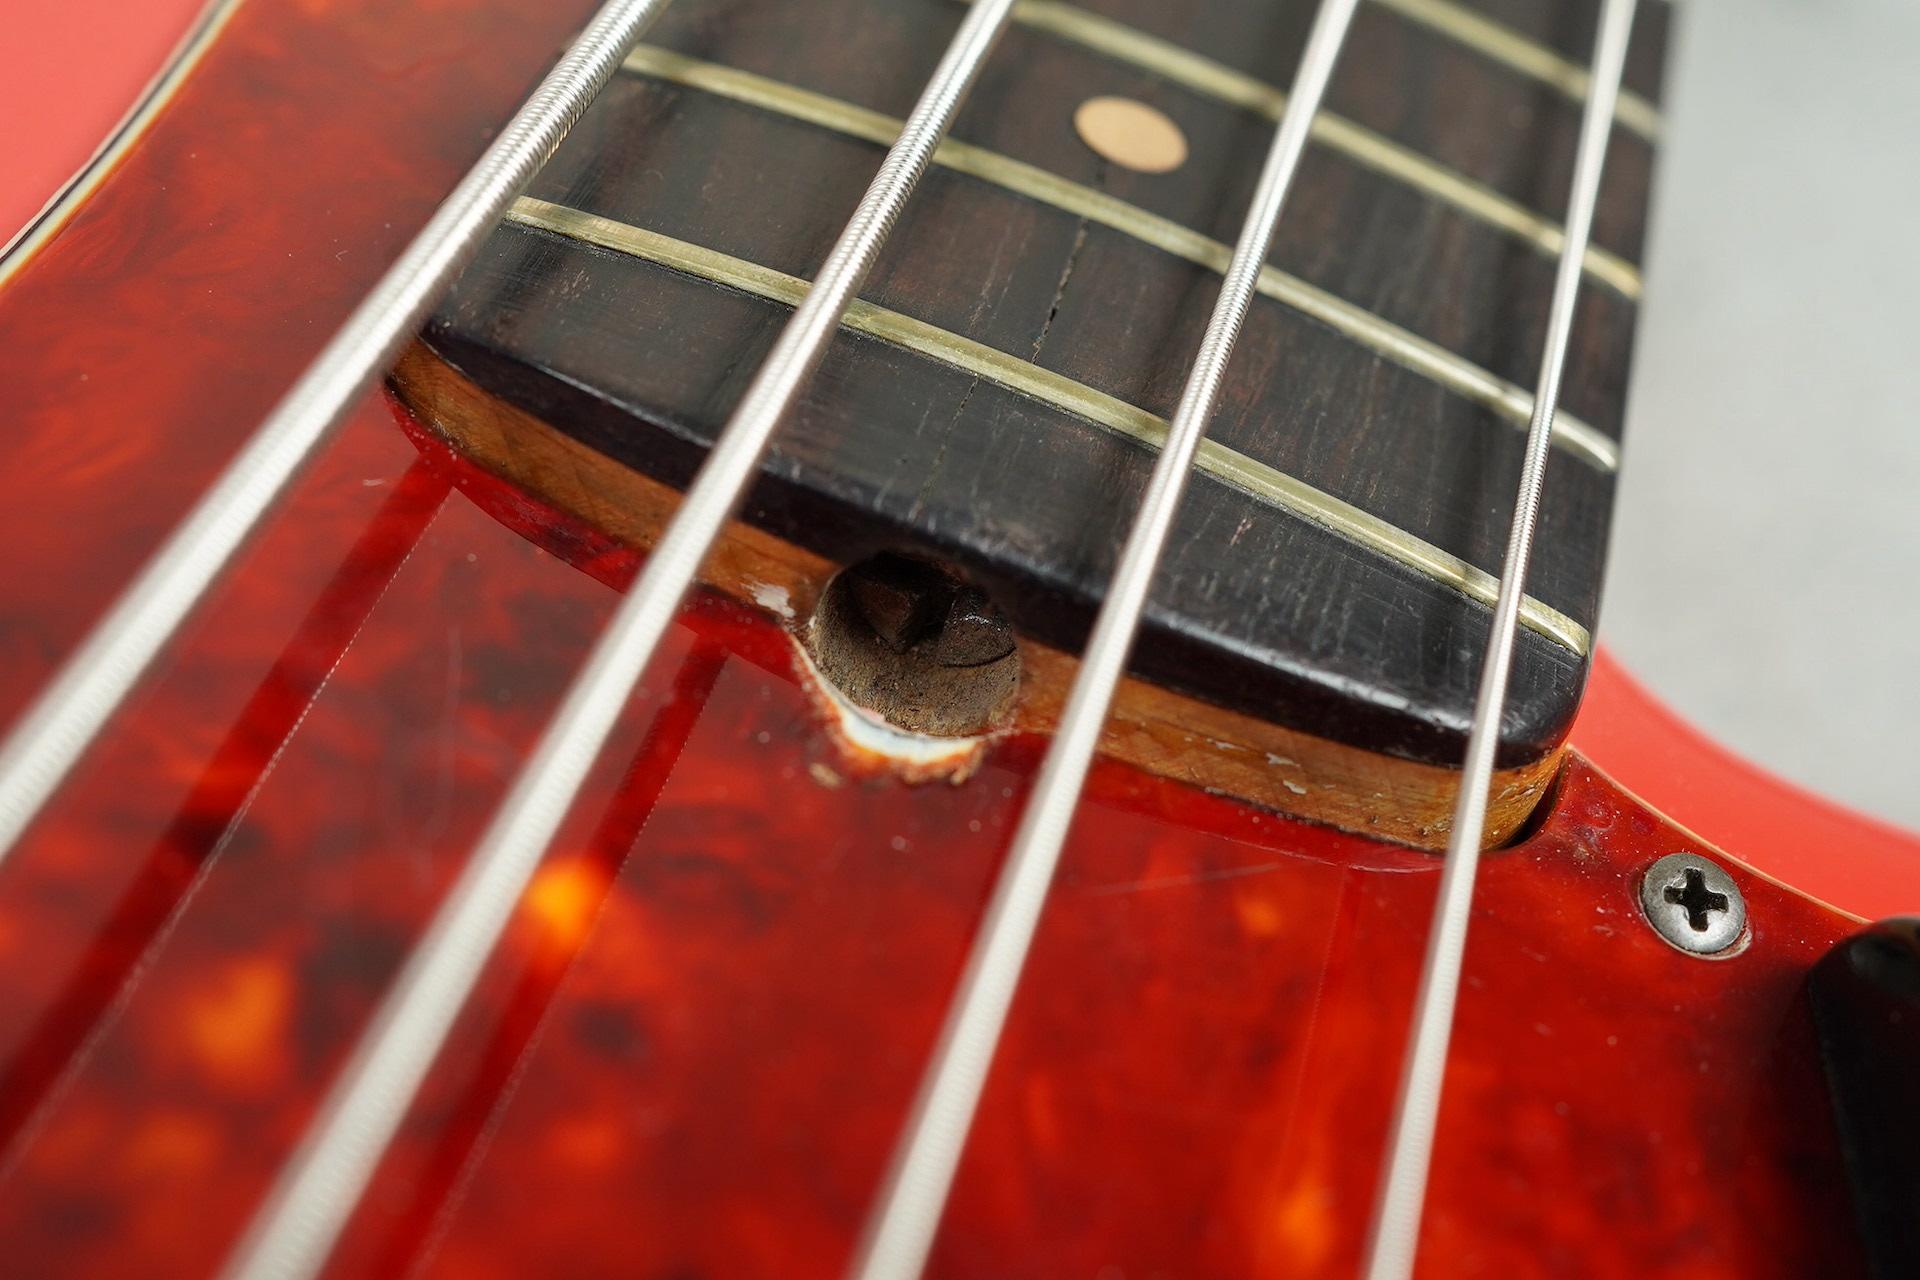 1962 Fender Precision Bass Fiesta Red refin